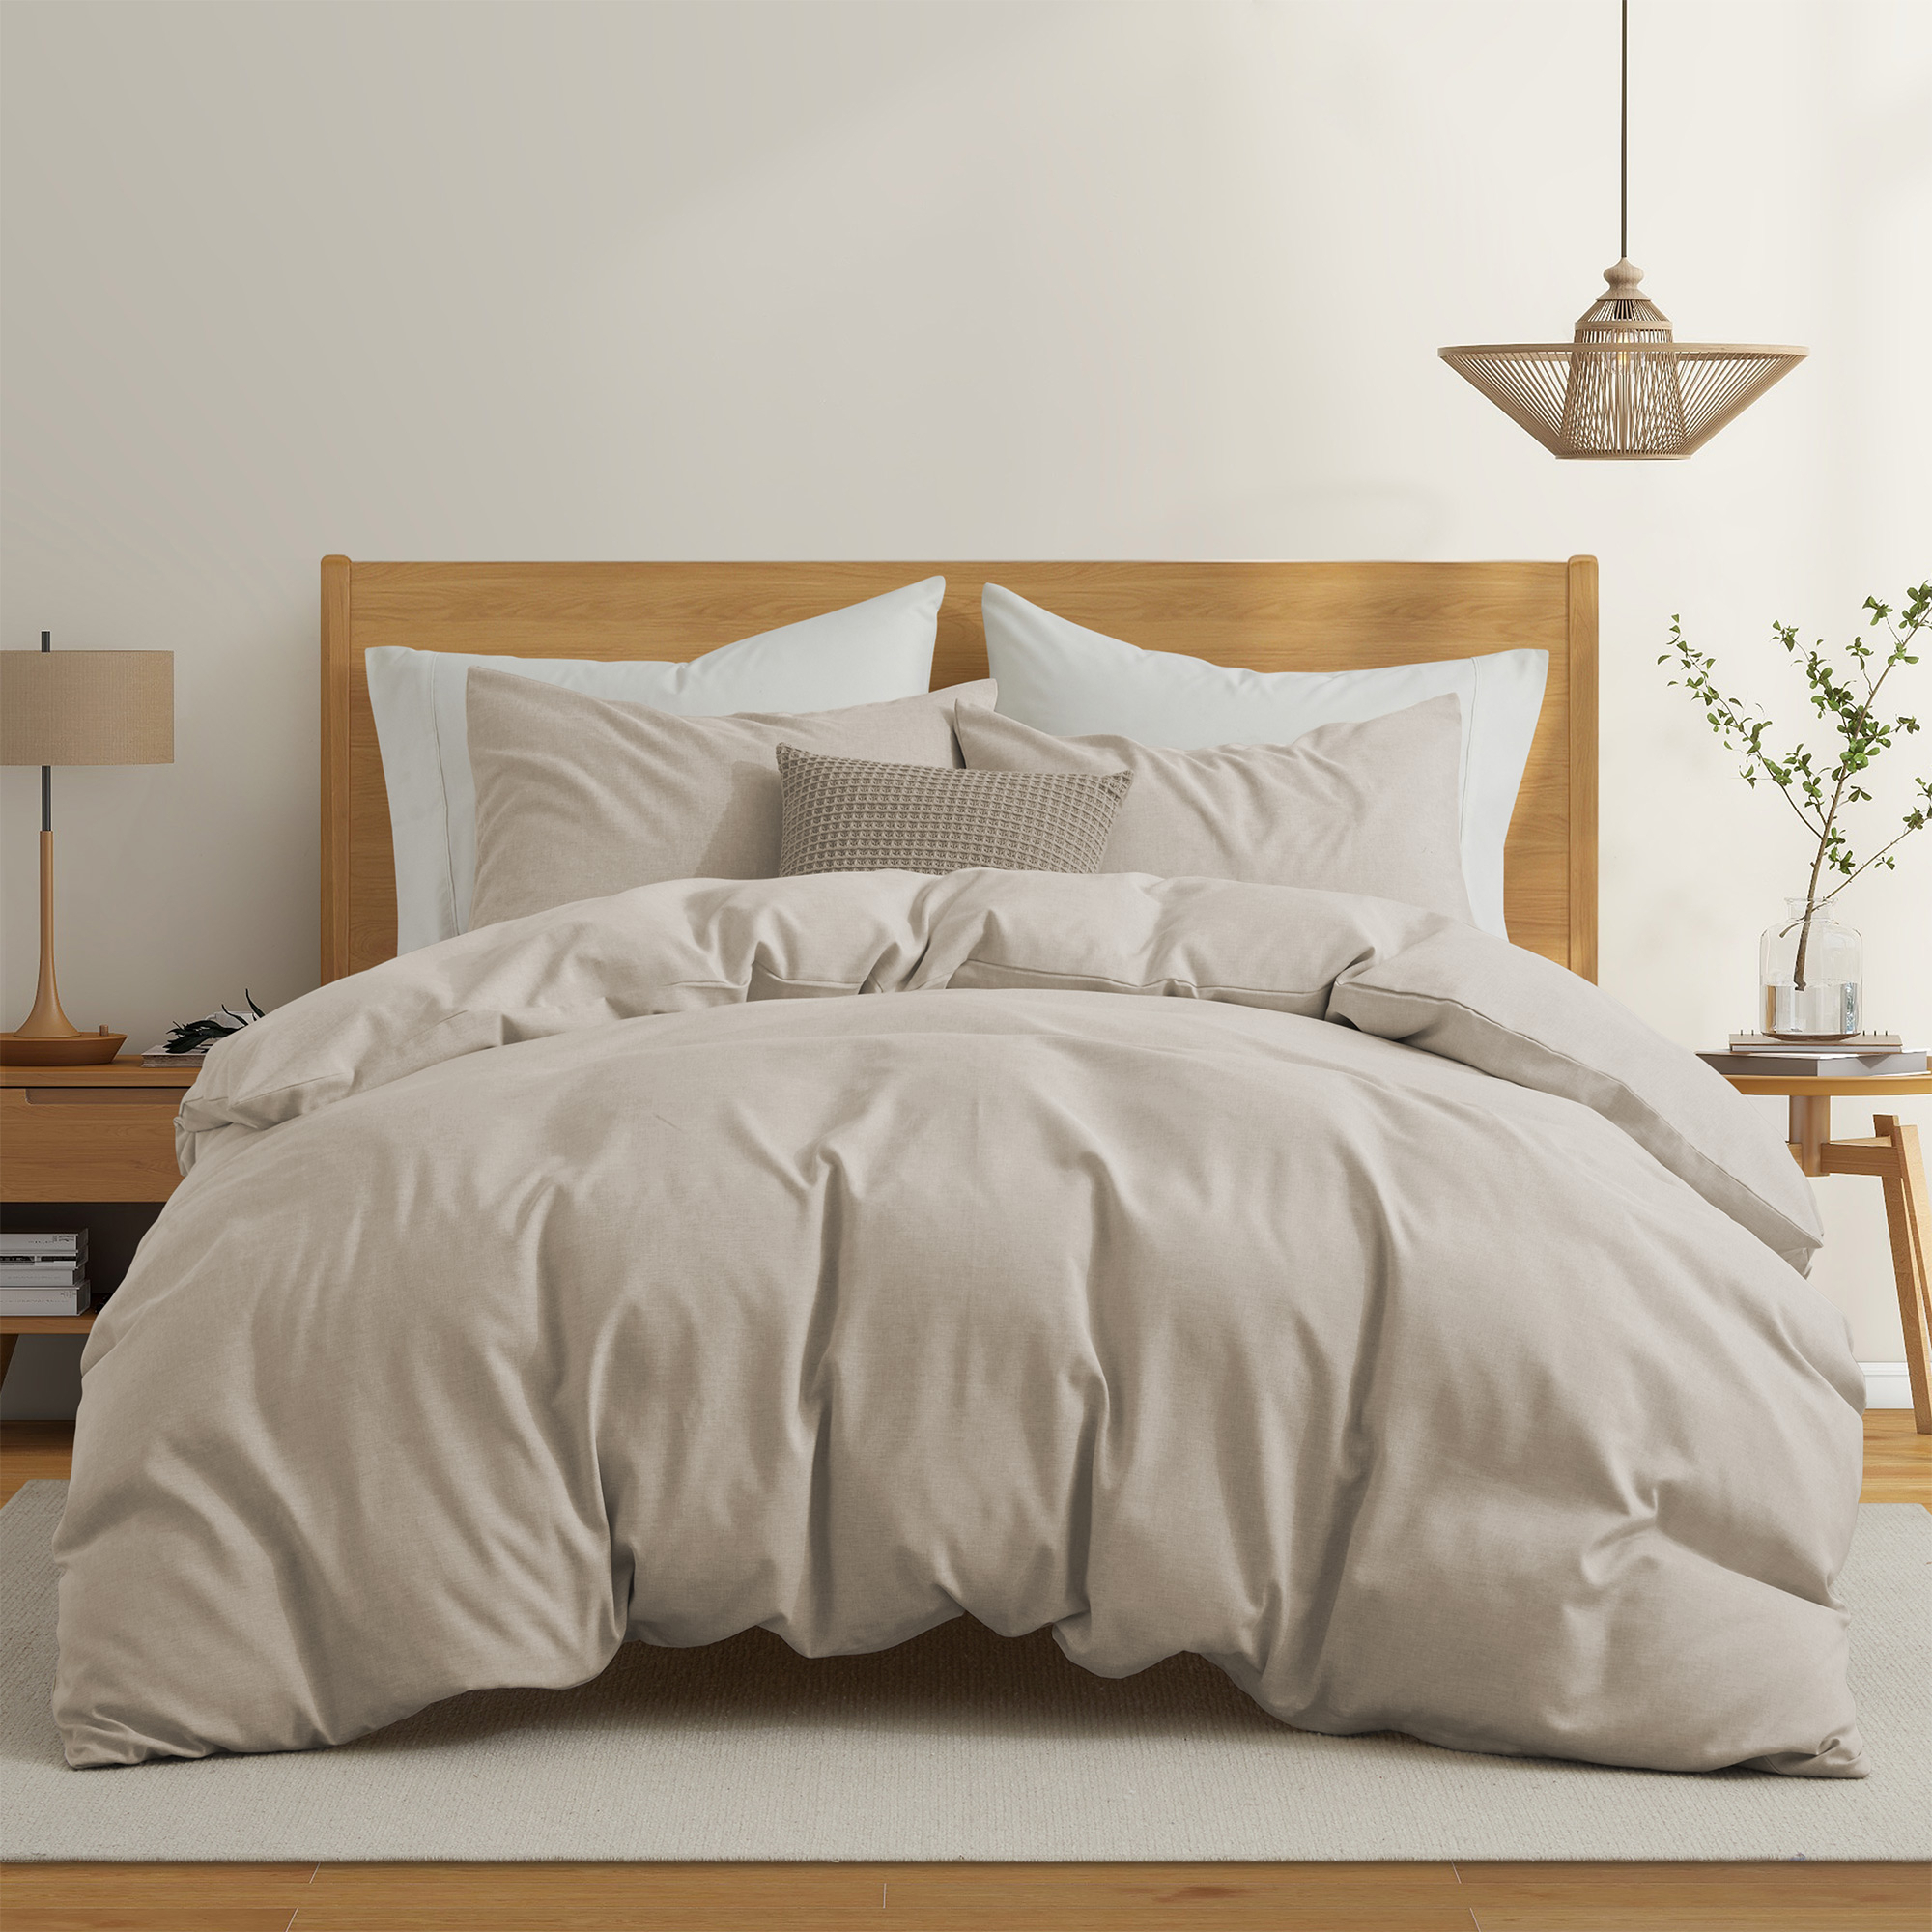 Ultimate Luxury Bedding Bundle: All Season Goose Down Comforter, 2 Pack Gusset Pillows, And Faux Linen Duvet Cover Set - Cream Bundles Optio